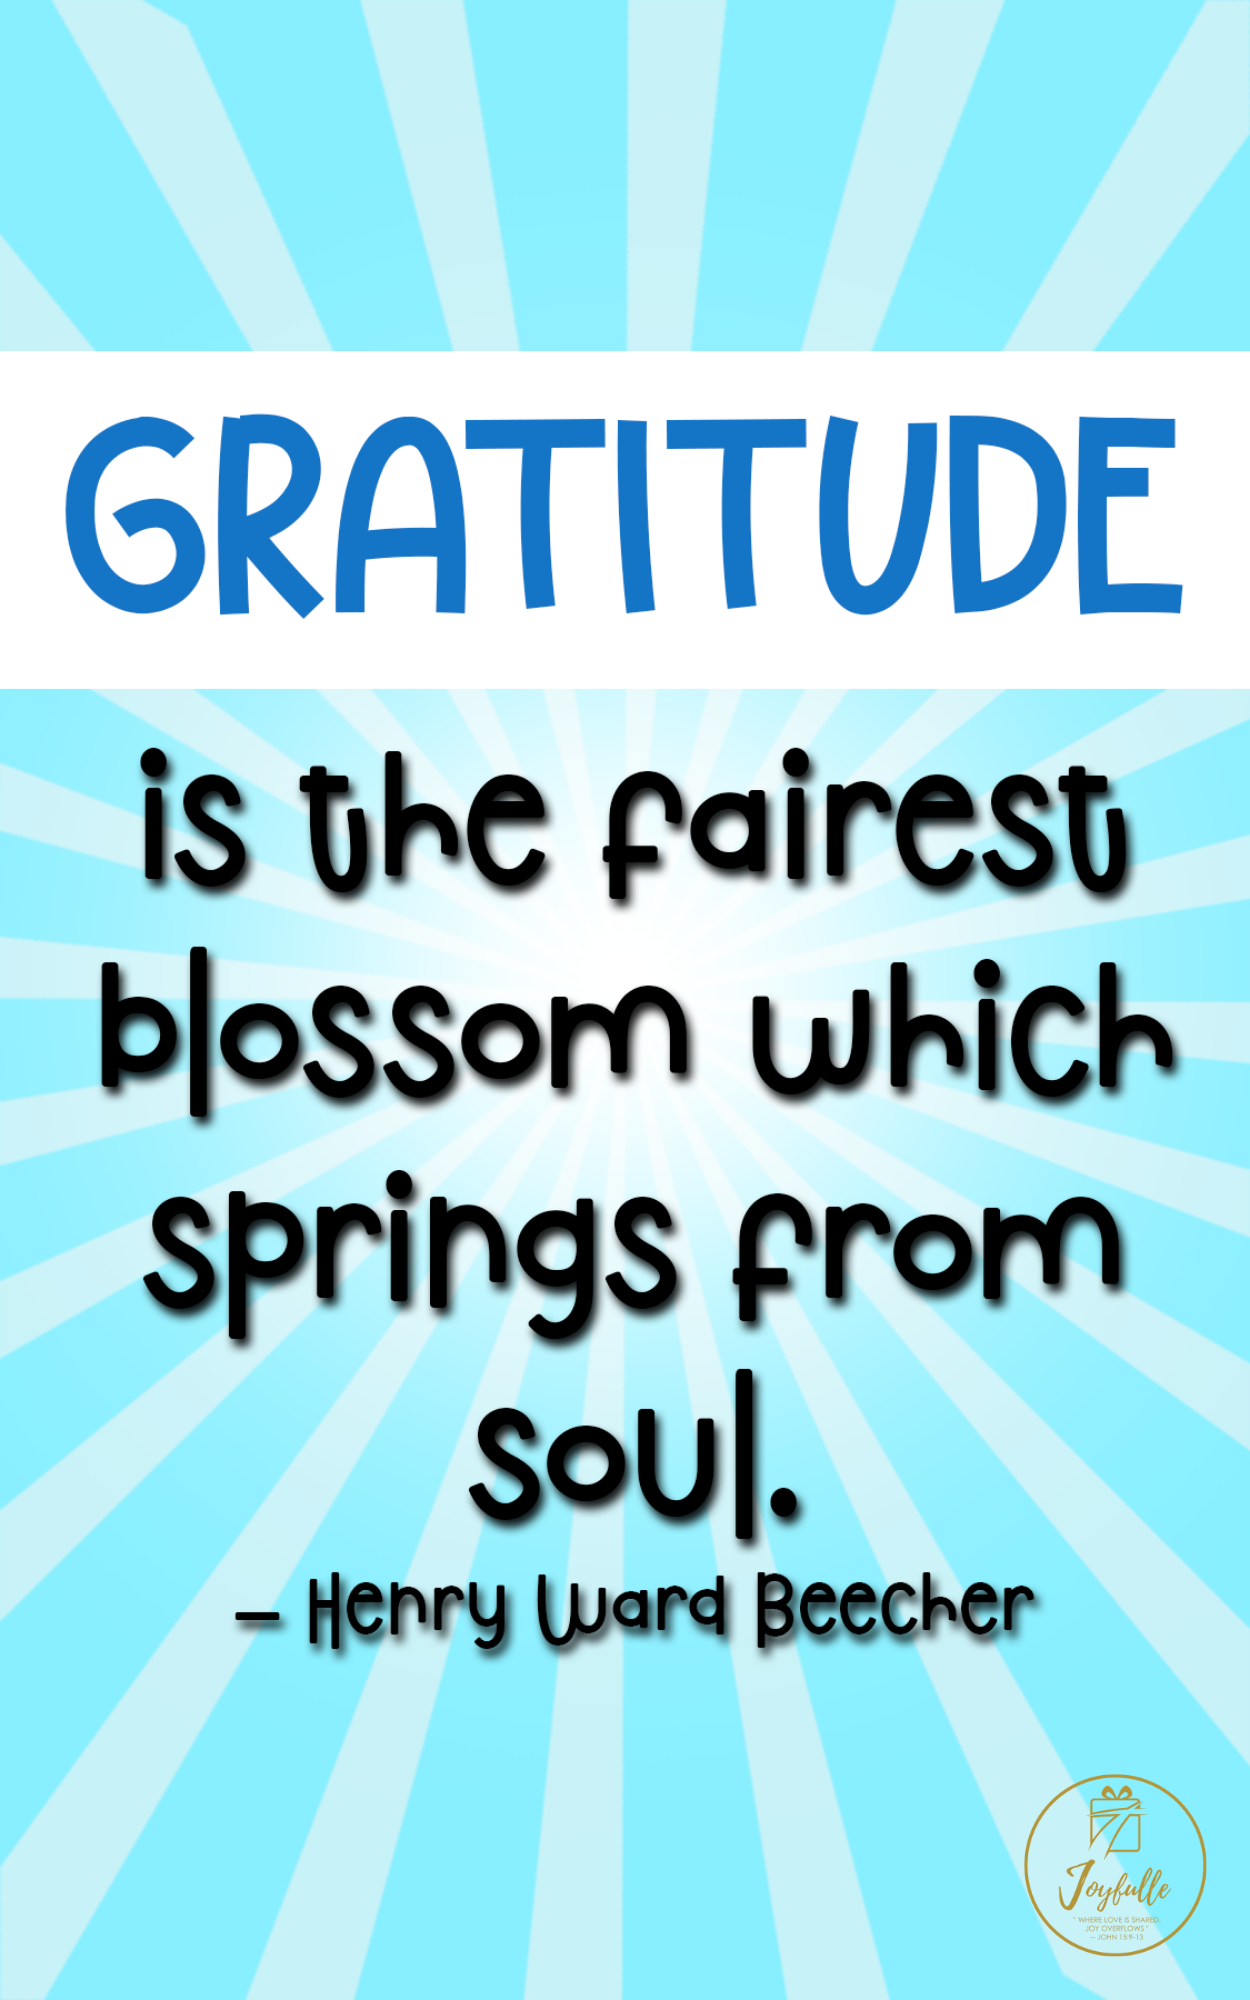 Gratitude Day Greeting Card 08